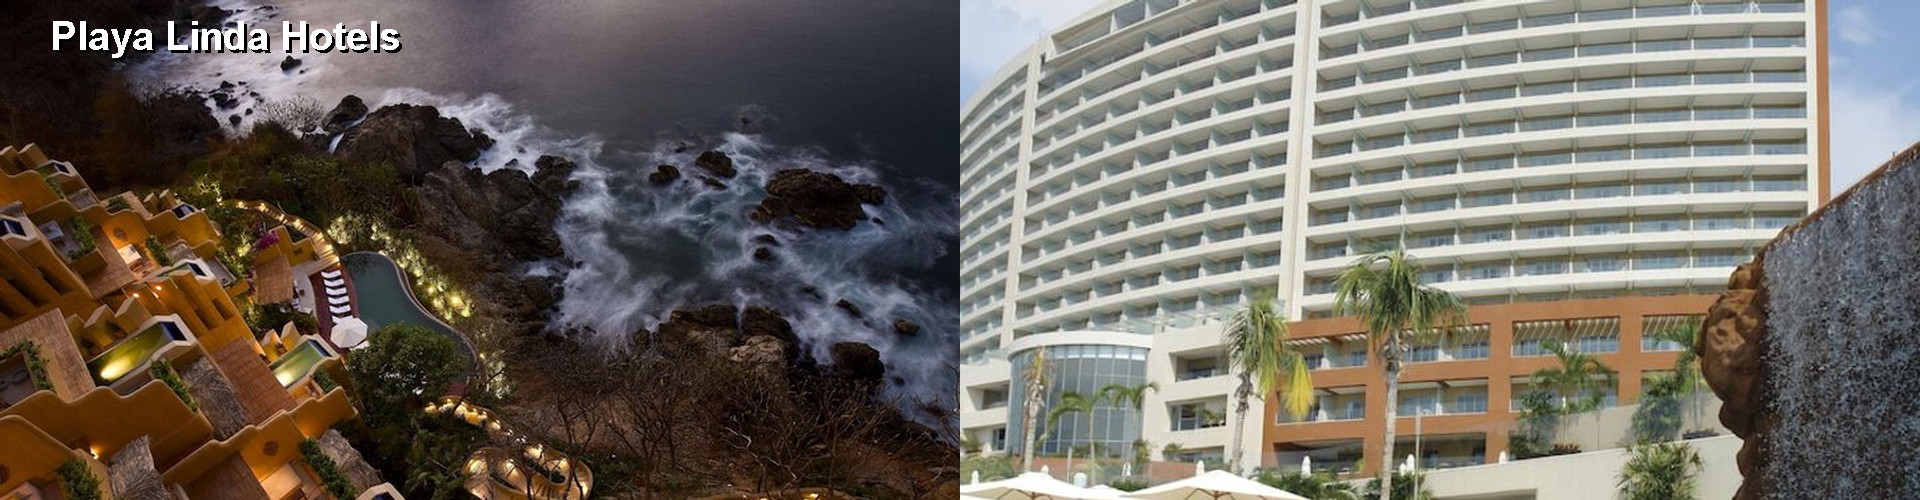 5 Best Hotels near Playa Linda